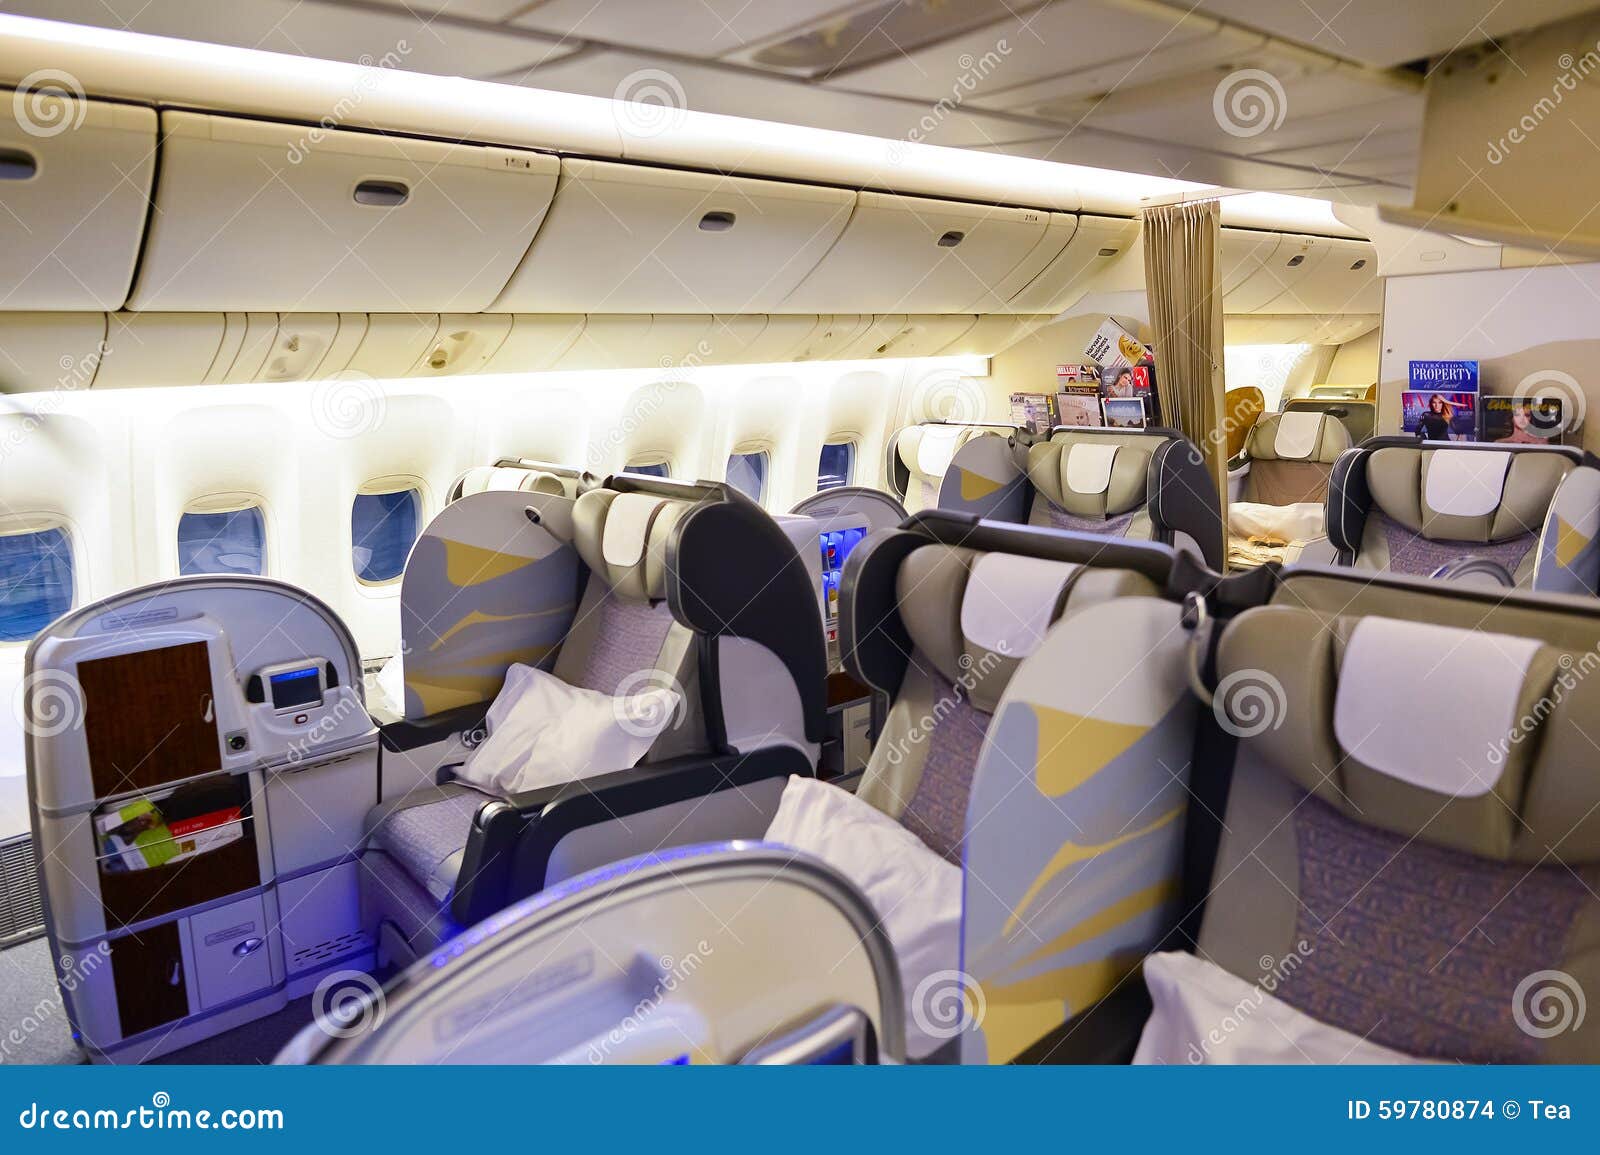 Top more than 139 777 aircraft interior